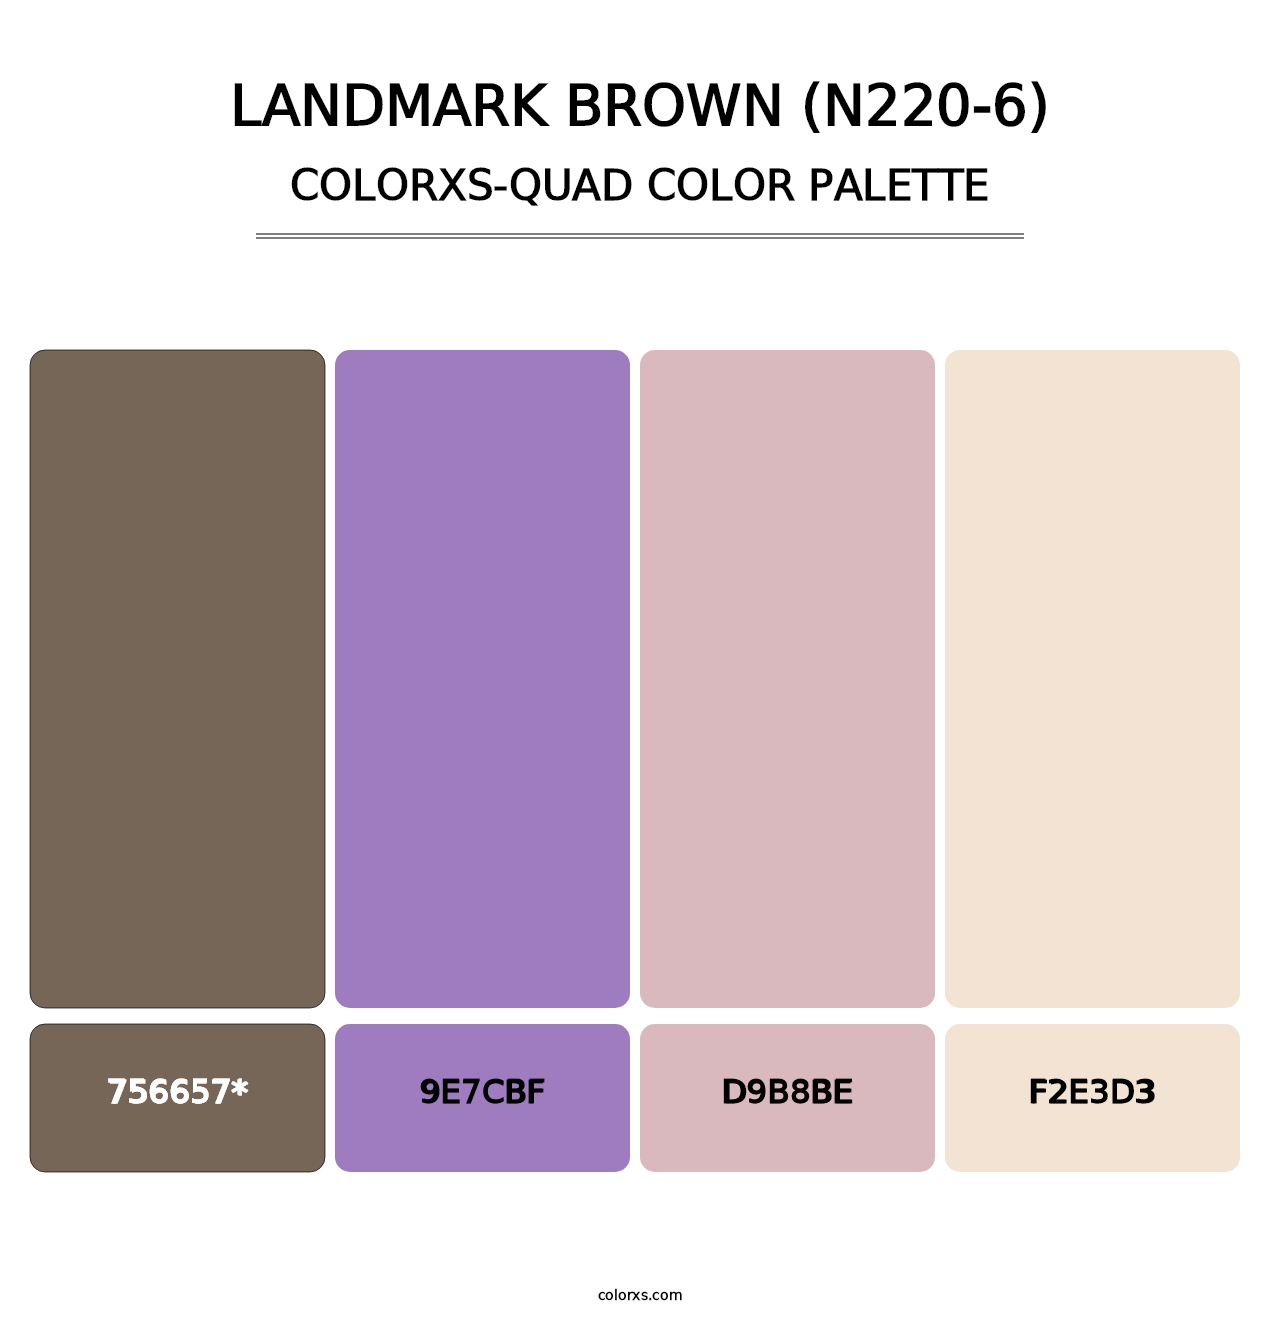 Landmark Brown (N220-6) - Colorxs Quad Palette